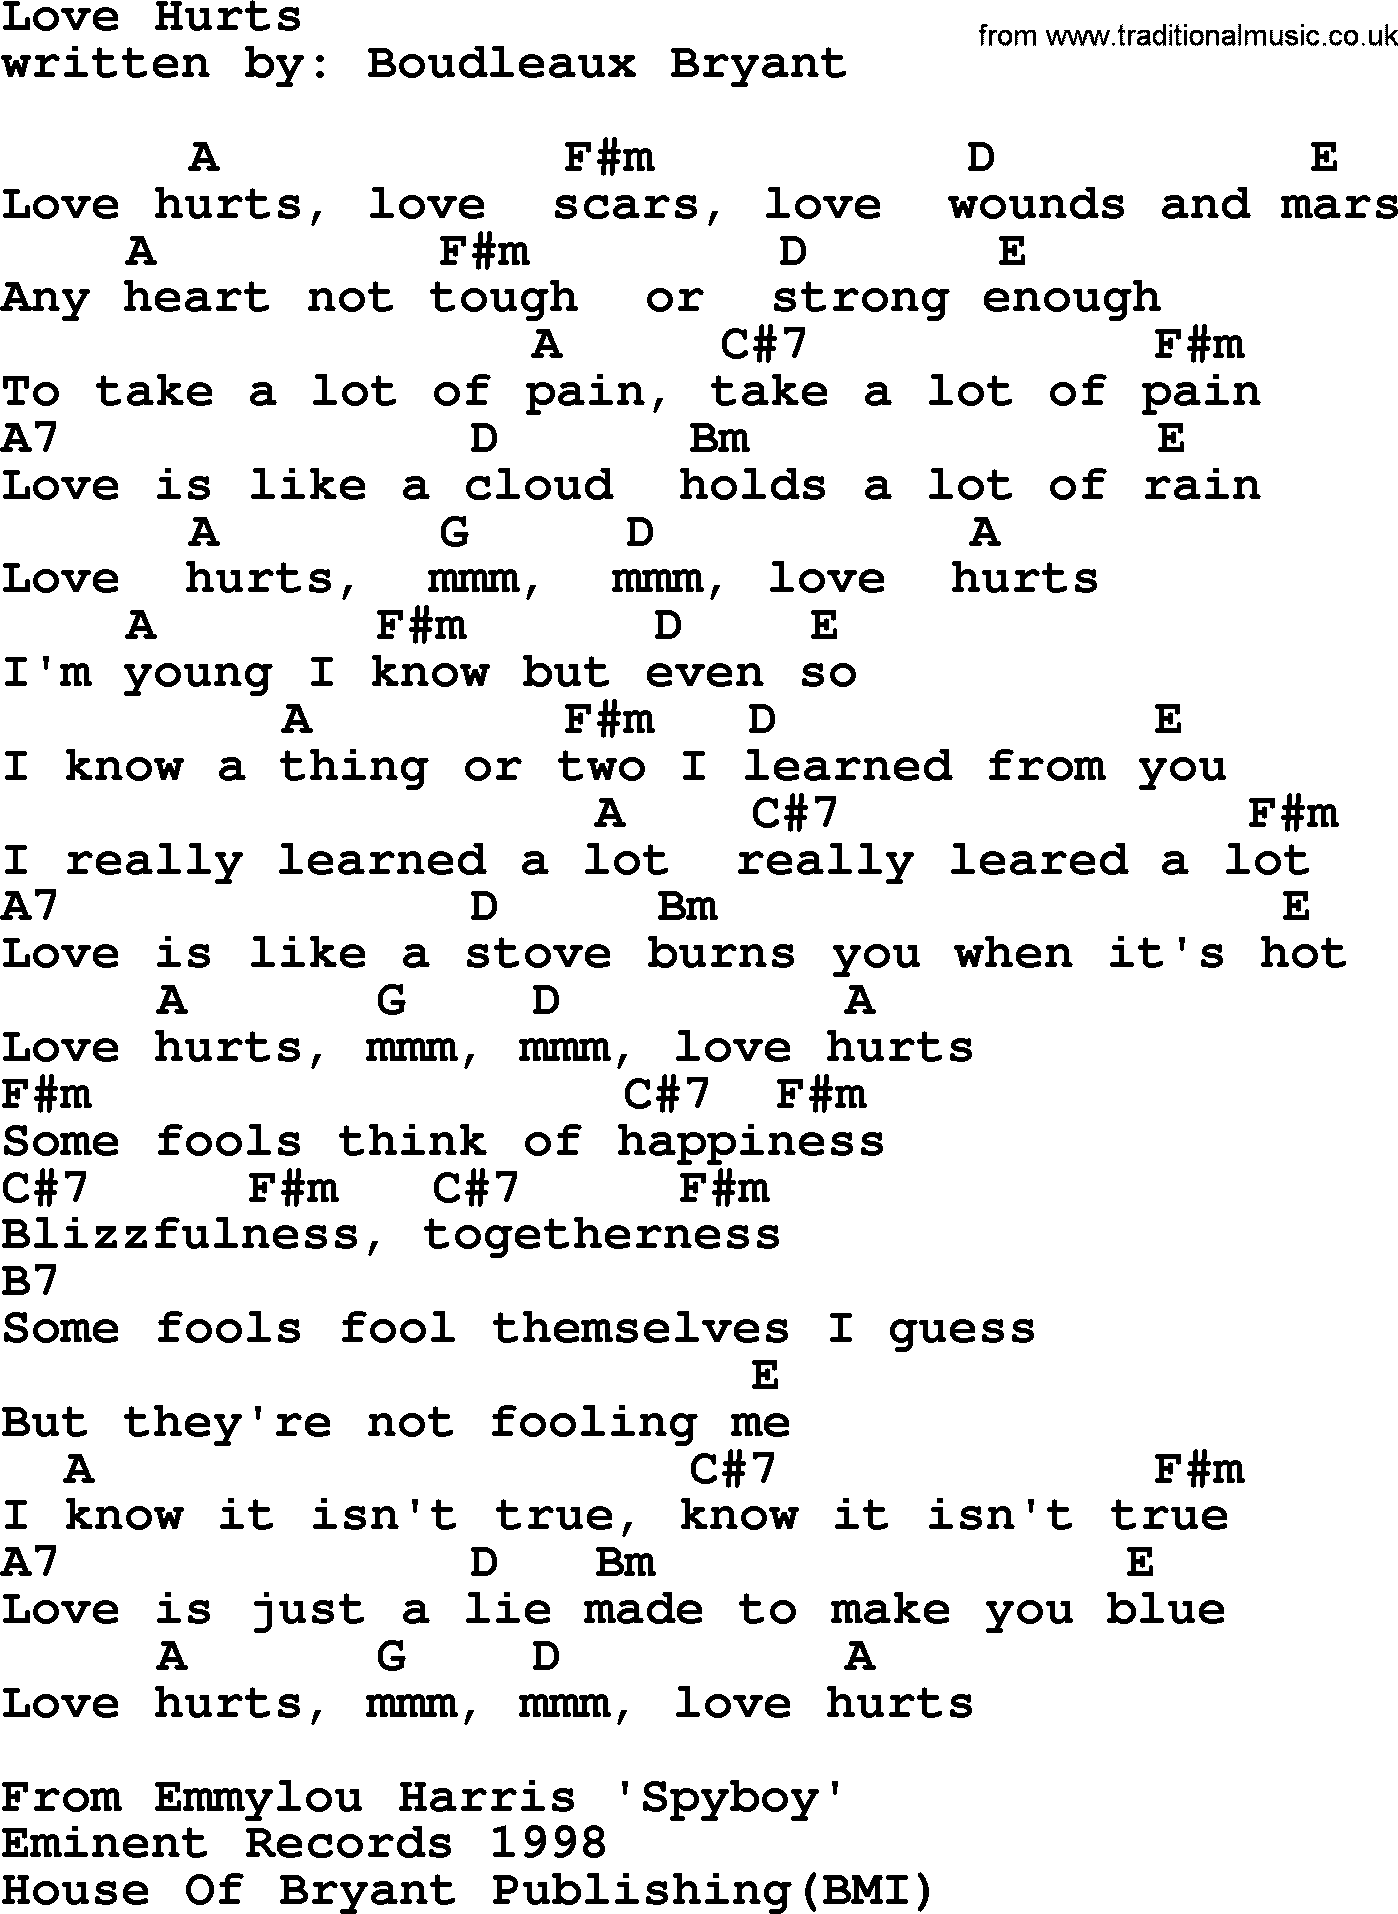 Emmylou Harris song: Love Hurts lyrics and chords